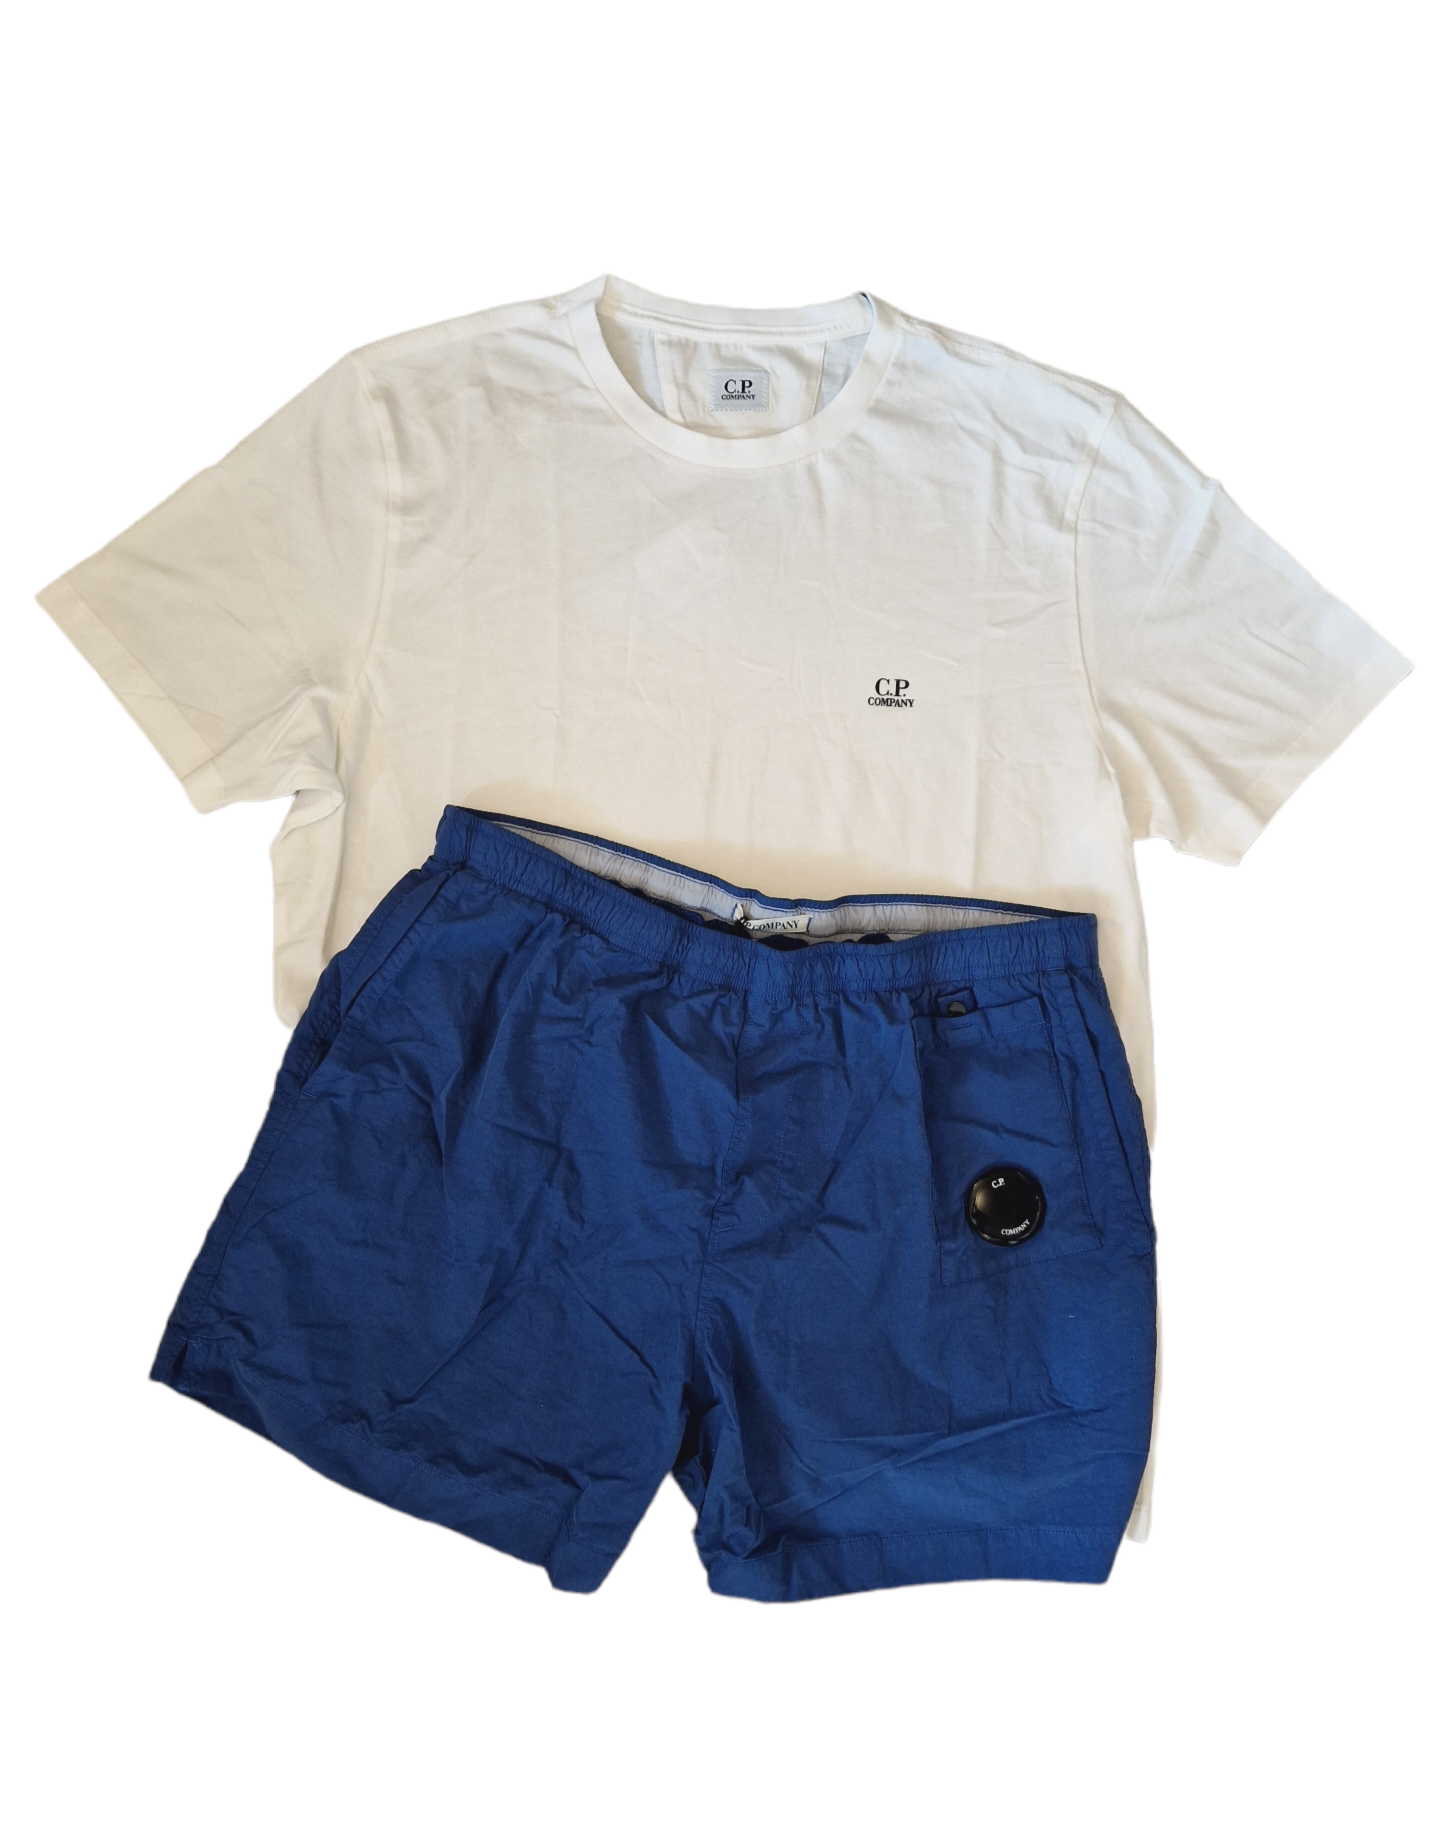 CP Company Shorts Set Blue/White